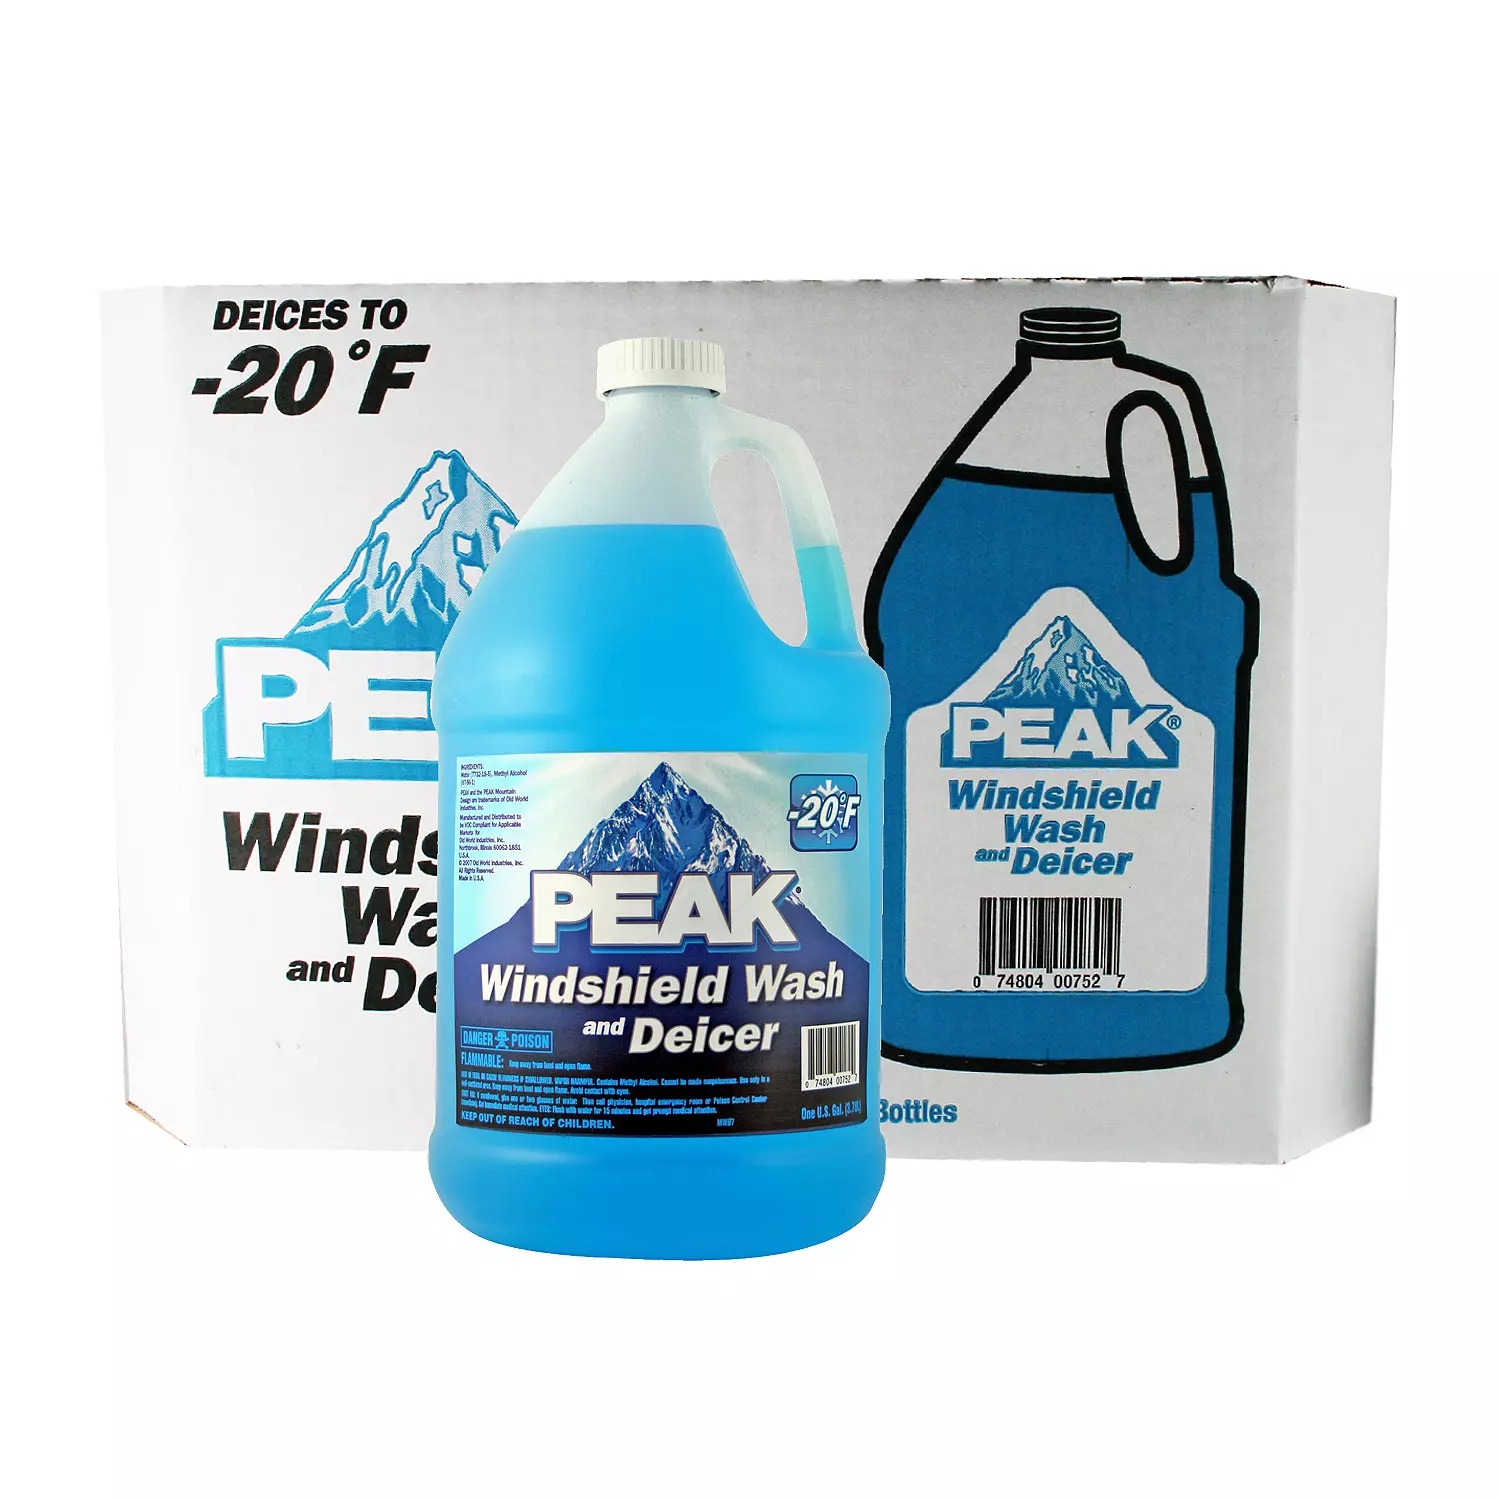 Peak Windshield Wash and Deicer – 1 gal. bottles – 6 pk.